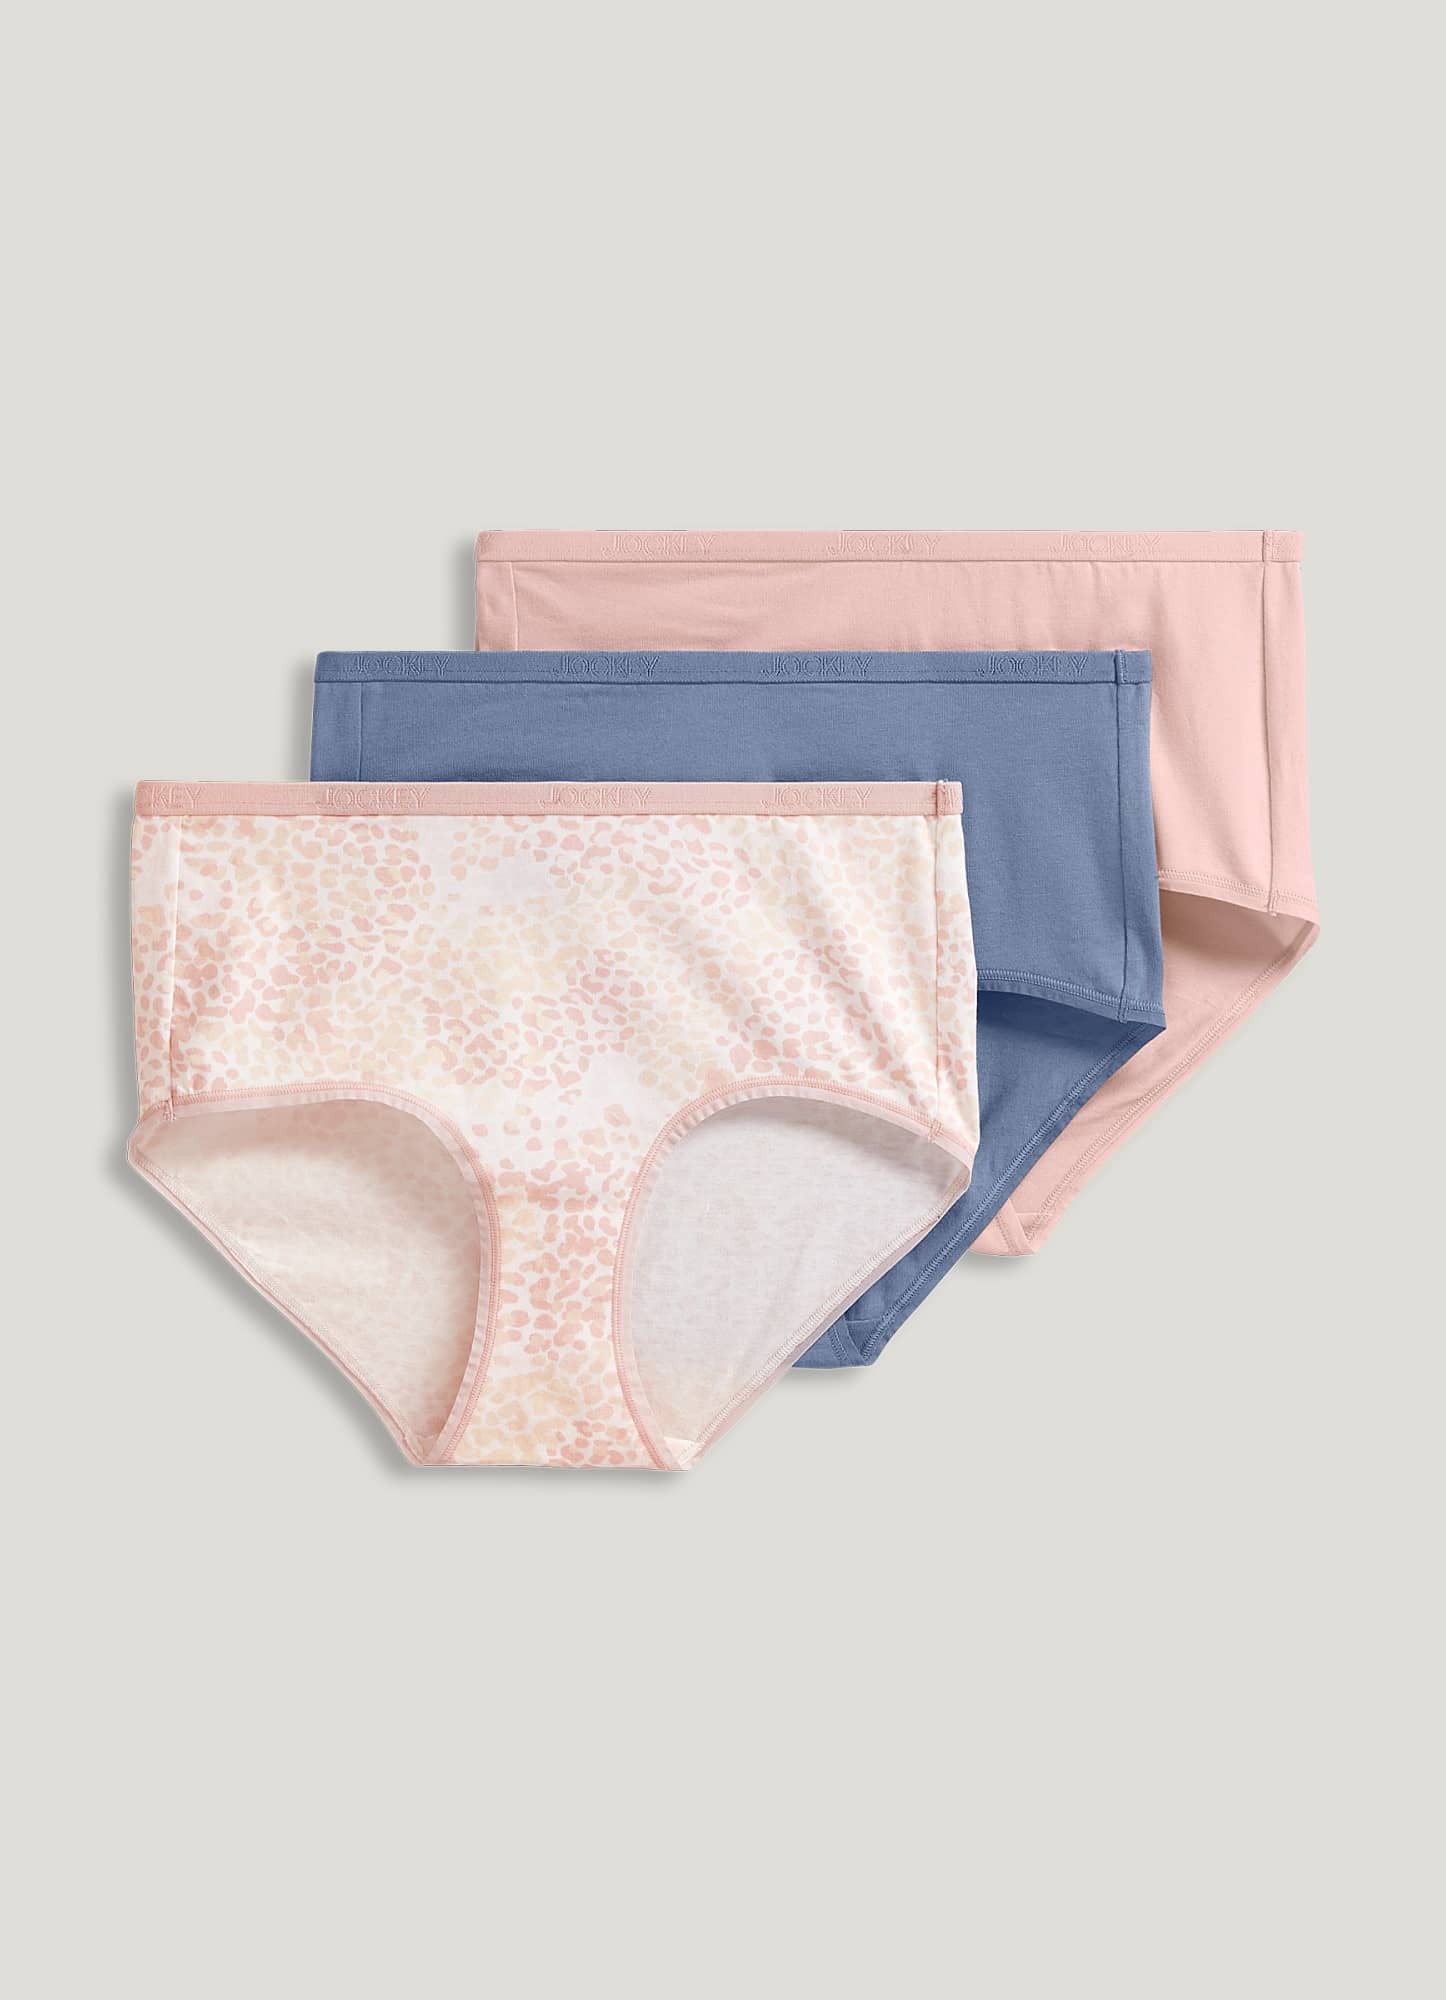 Jockey® Essentials Girls’ Cotton Stretch Brief Panty- 3 Pack, Sizes S-XL  (6-16)